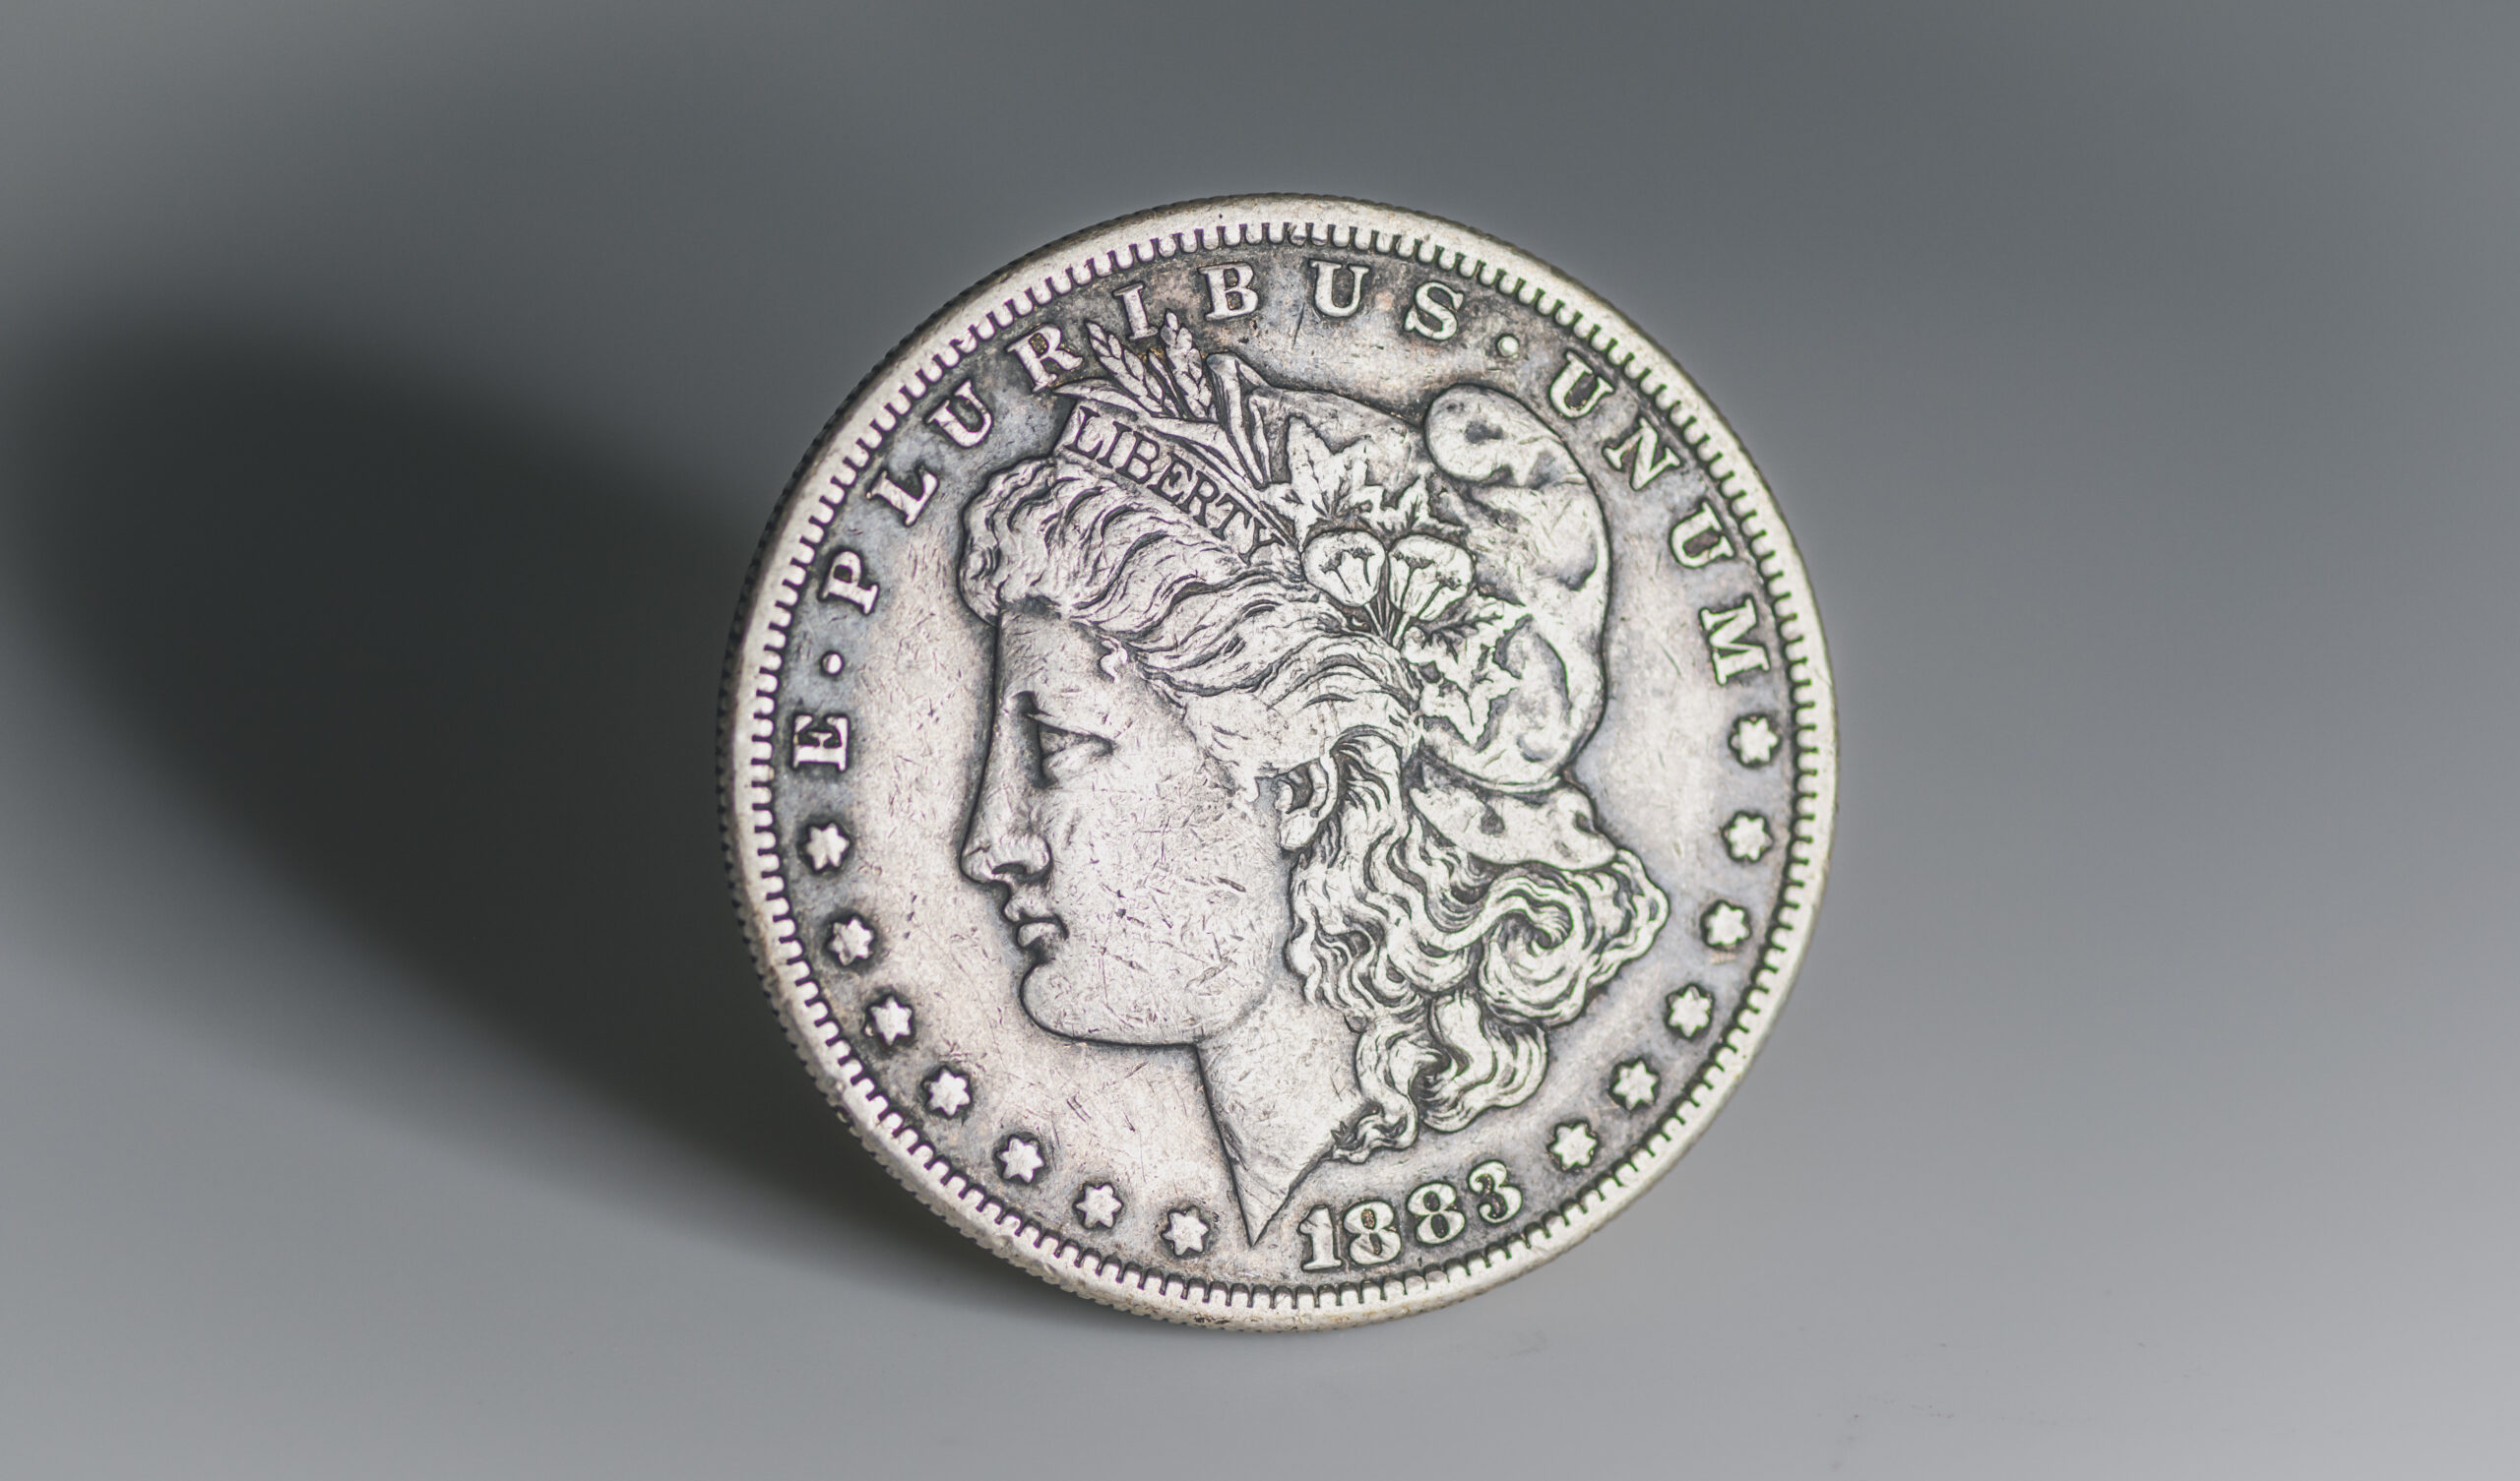 Image of a Morgan silver dollar